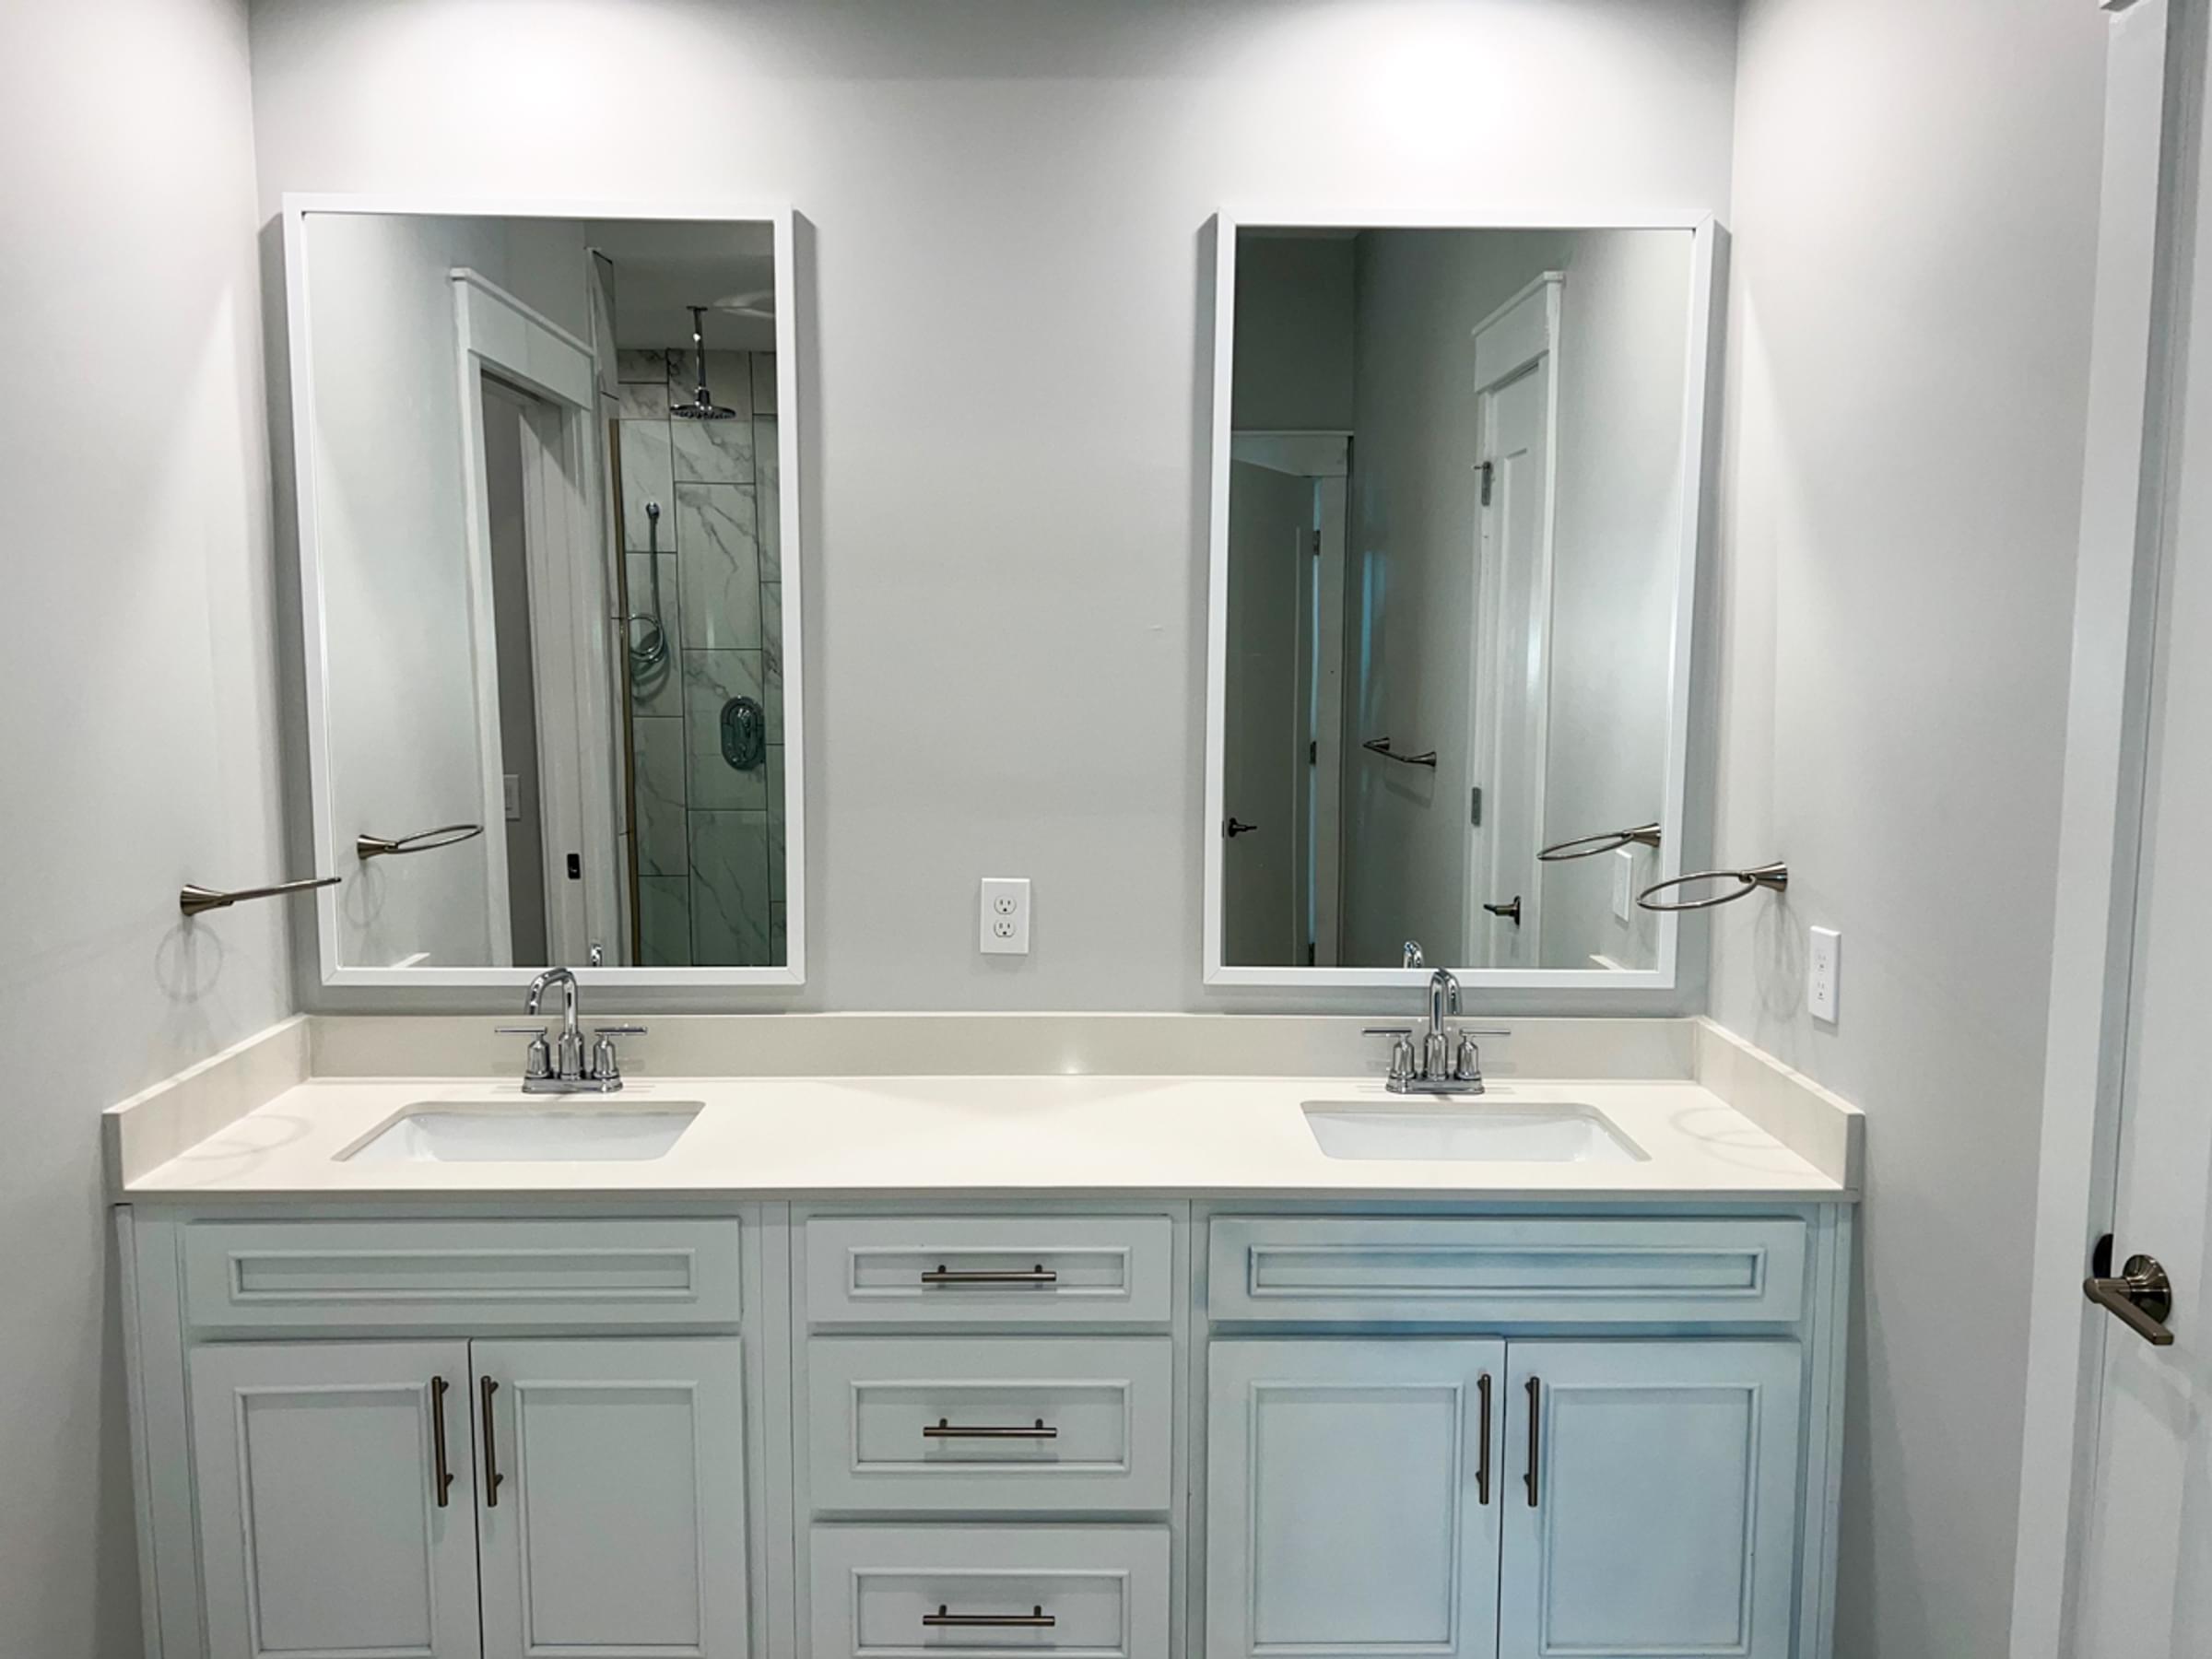 Double vanity sinks in bathroom